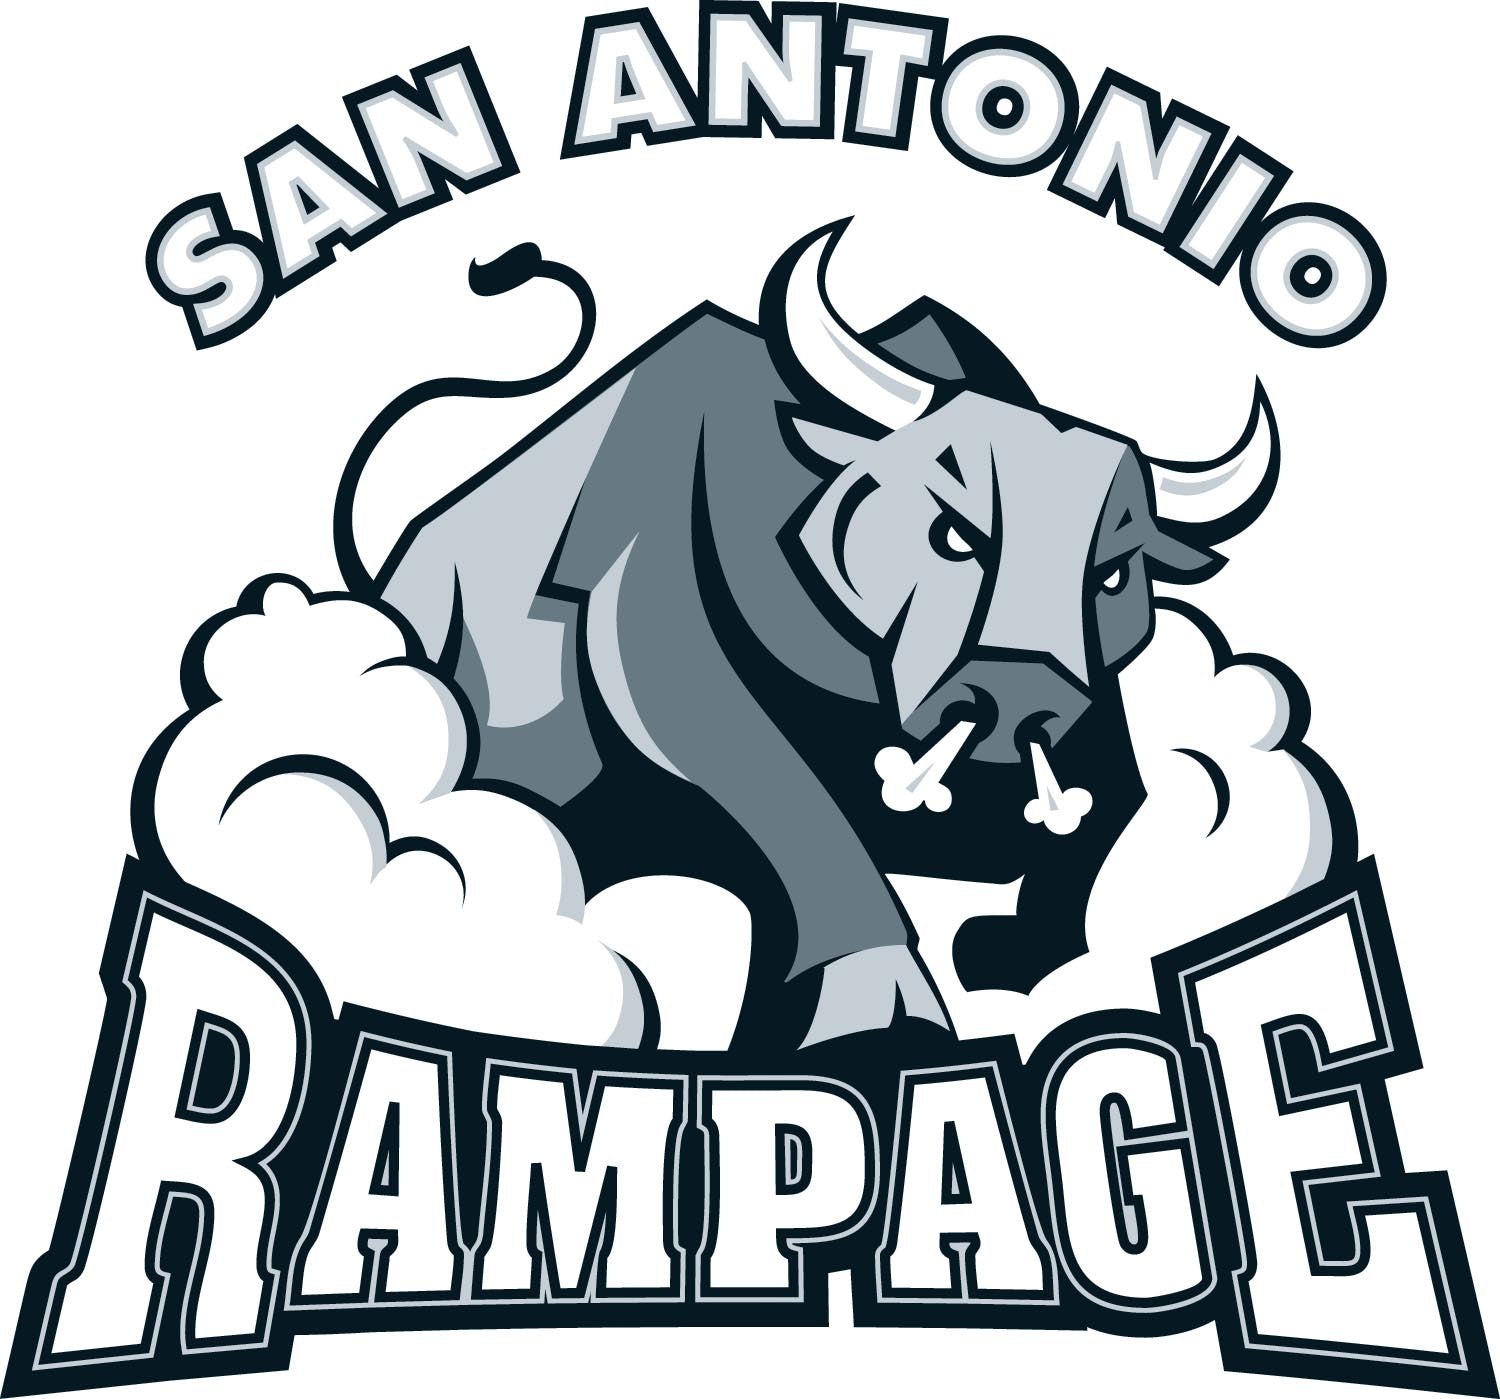 Authentic SP San Antonio Rampage AHL Hockey Sewn Jersey Blank 